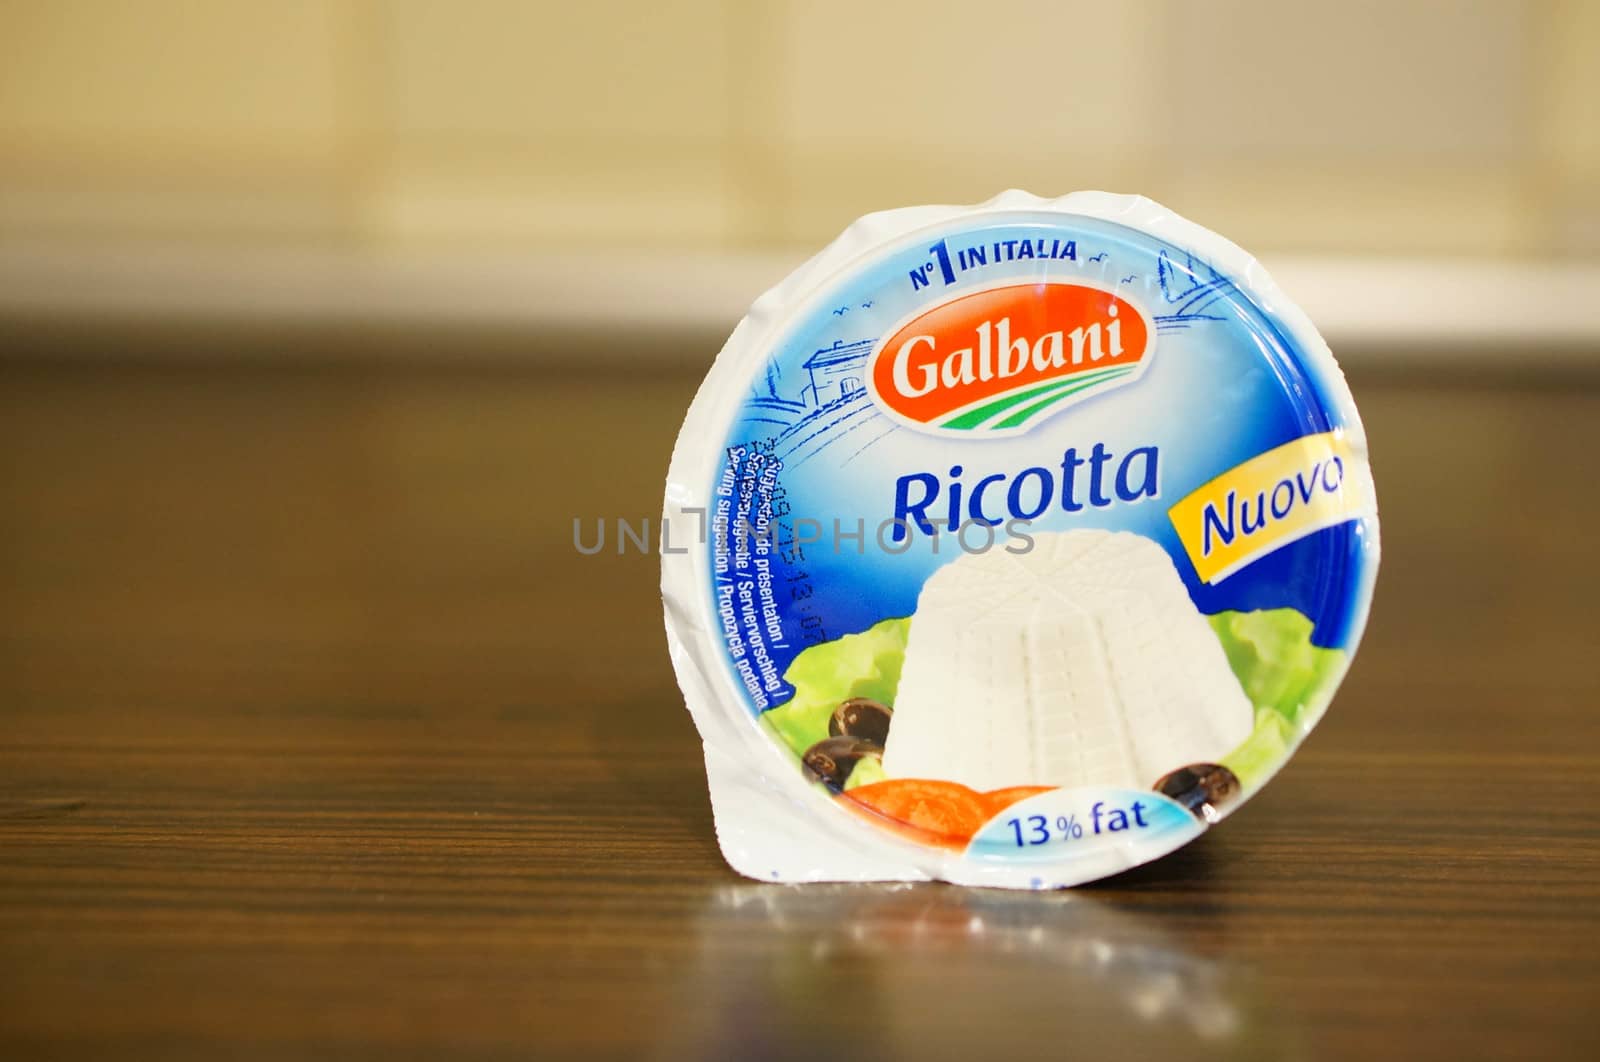 POZNAN, POLAND - SEPTEMBER 24, 2015: Pack of Italina Galbani ricotta cheese